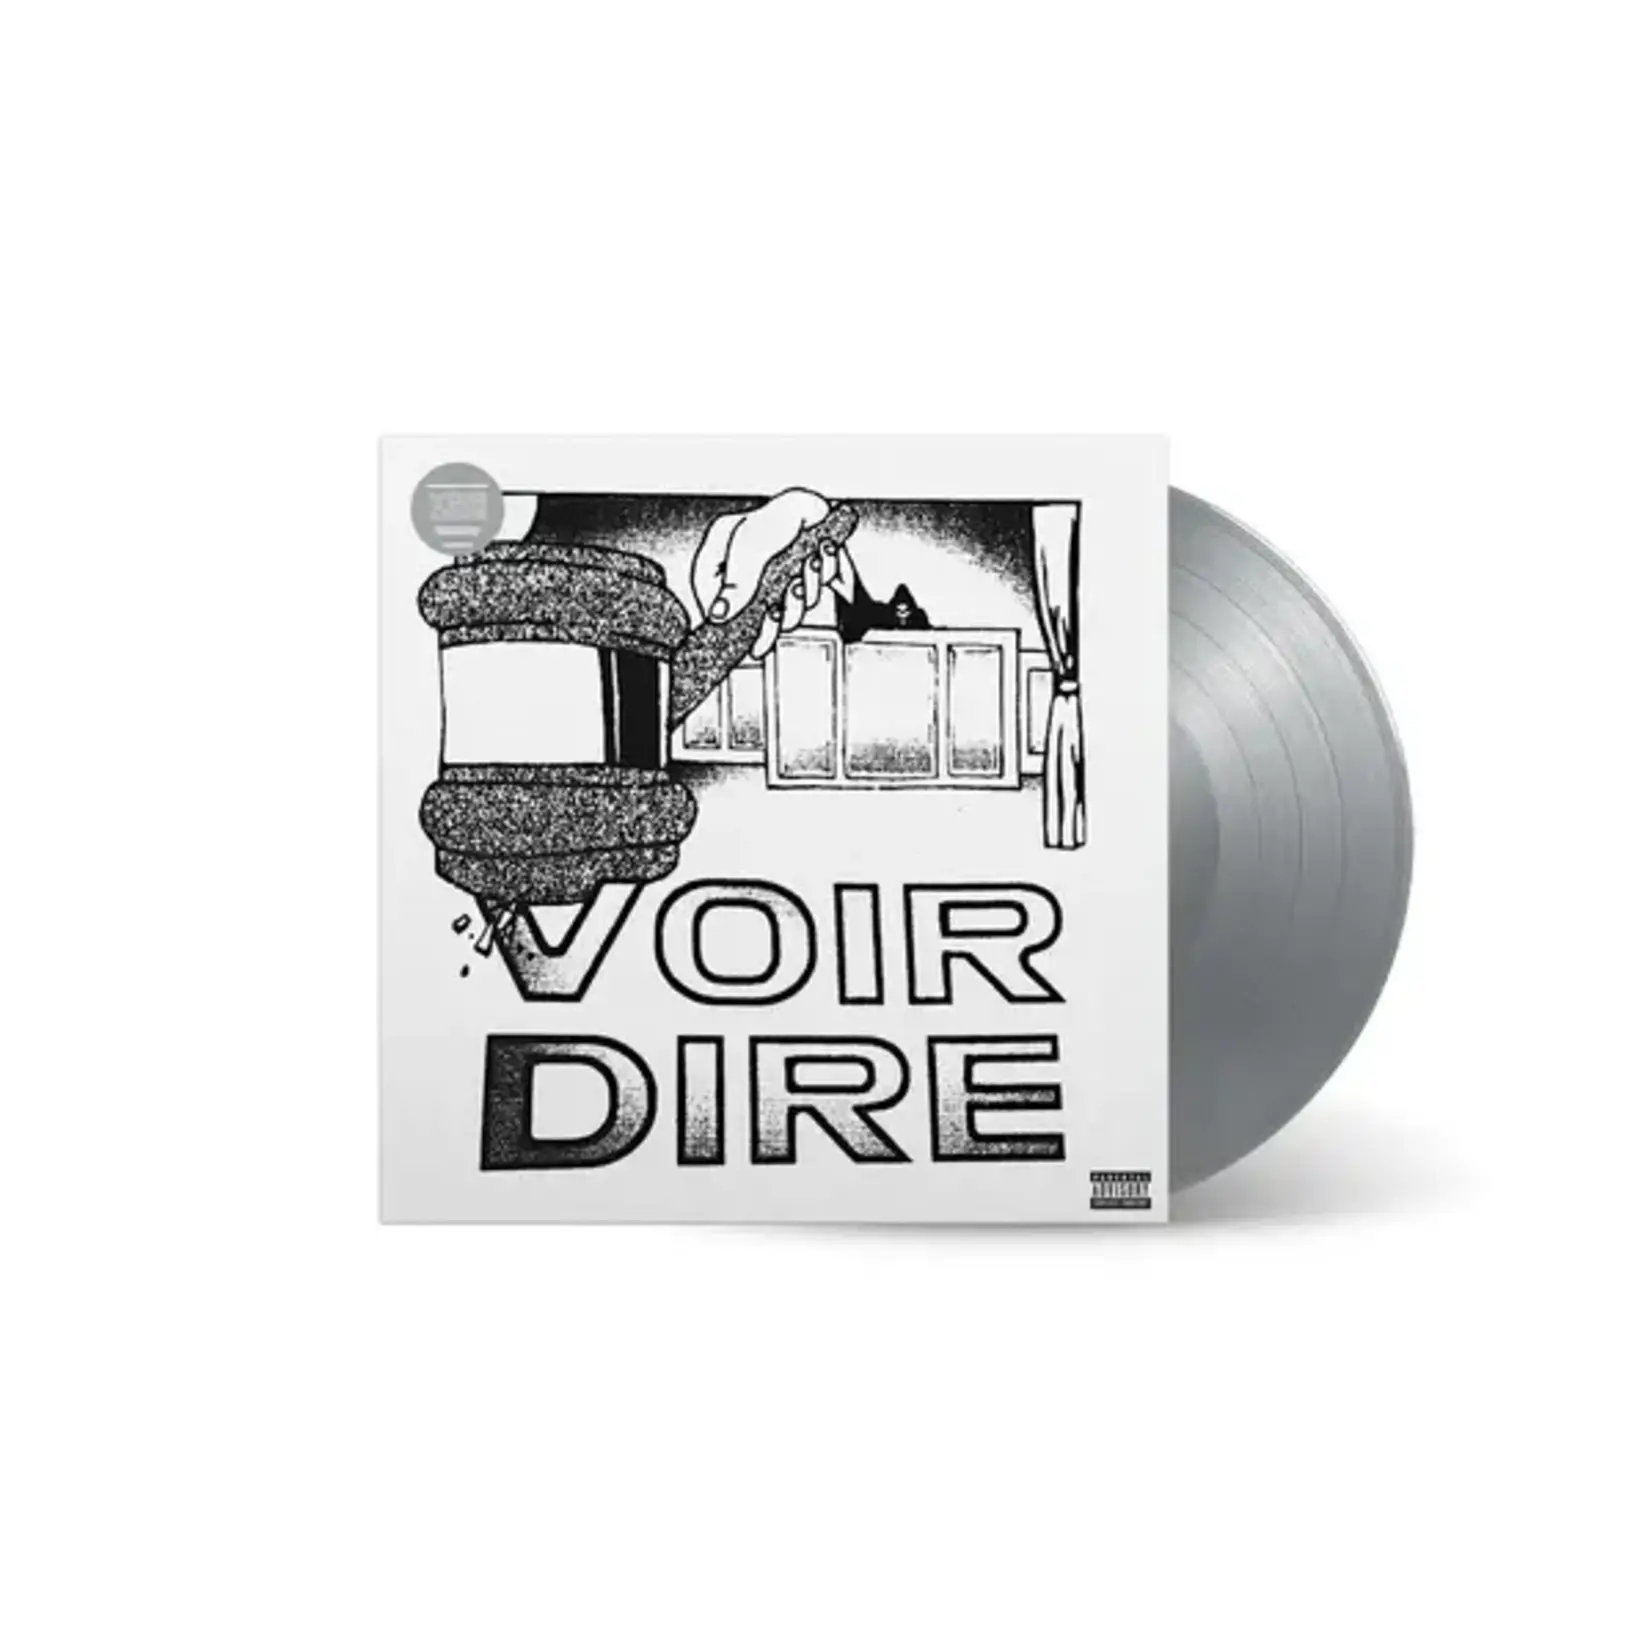 Earl Sweatshirt/Alchemist - Voir Dire (Indie Silver Vinyl) [LP]